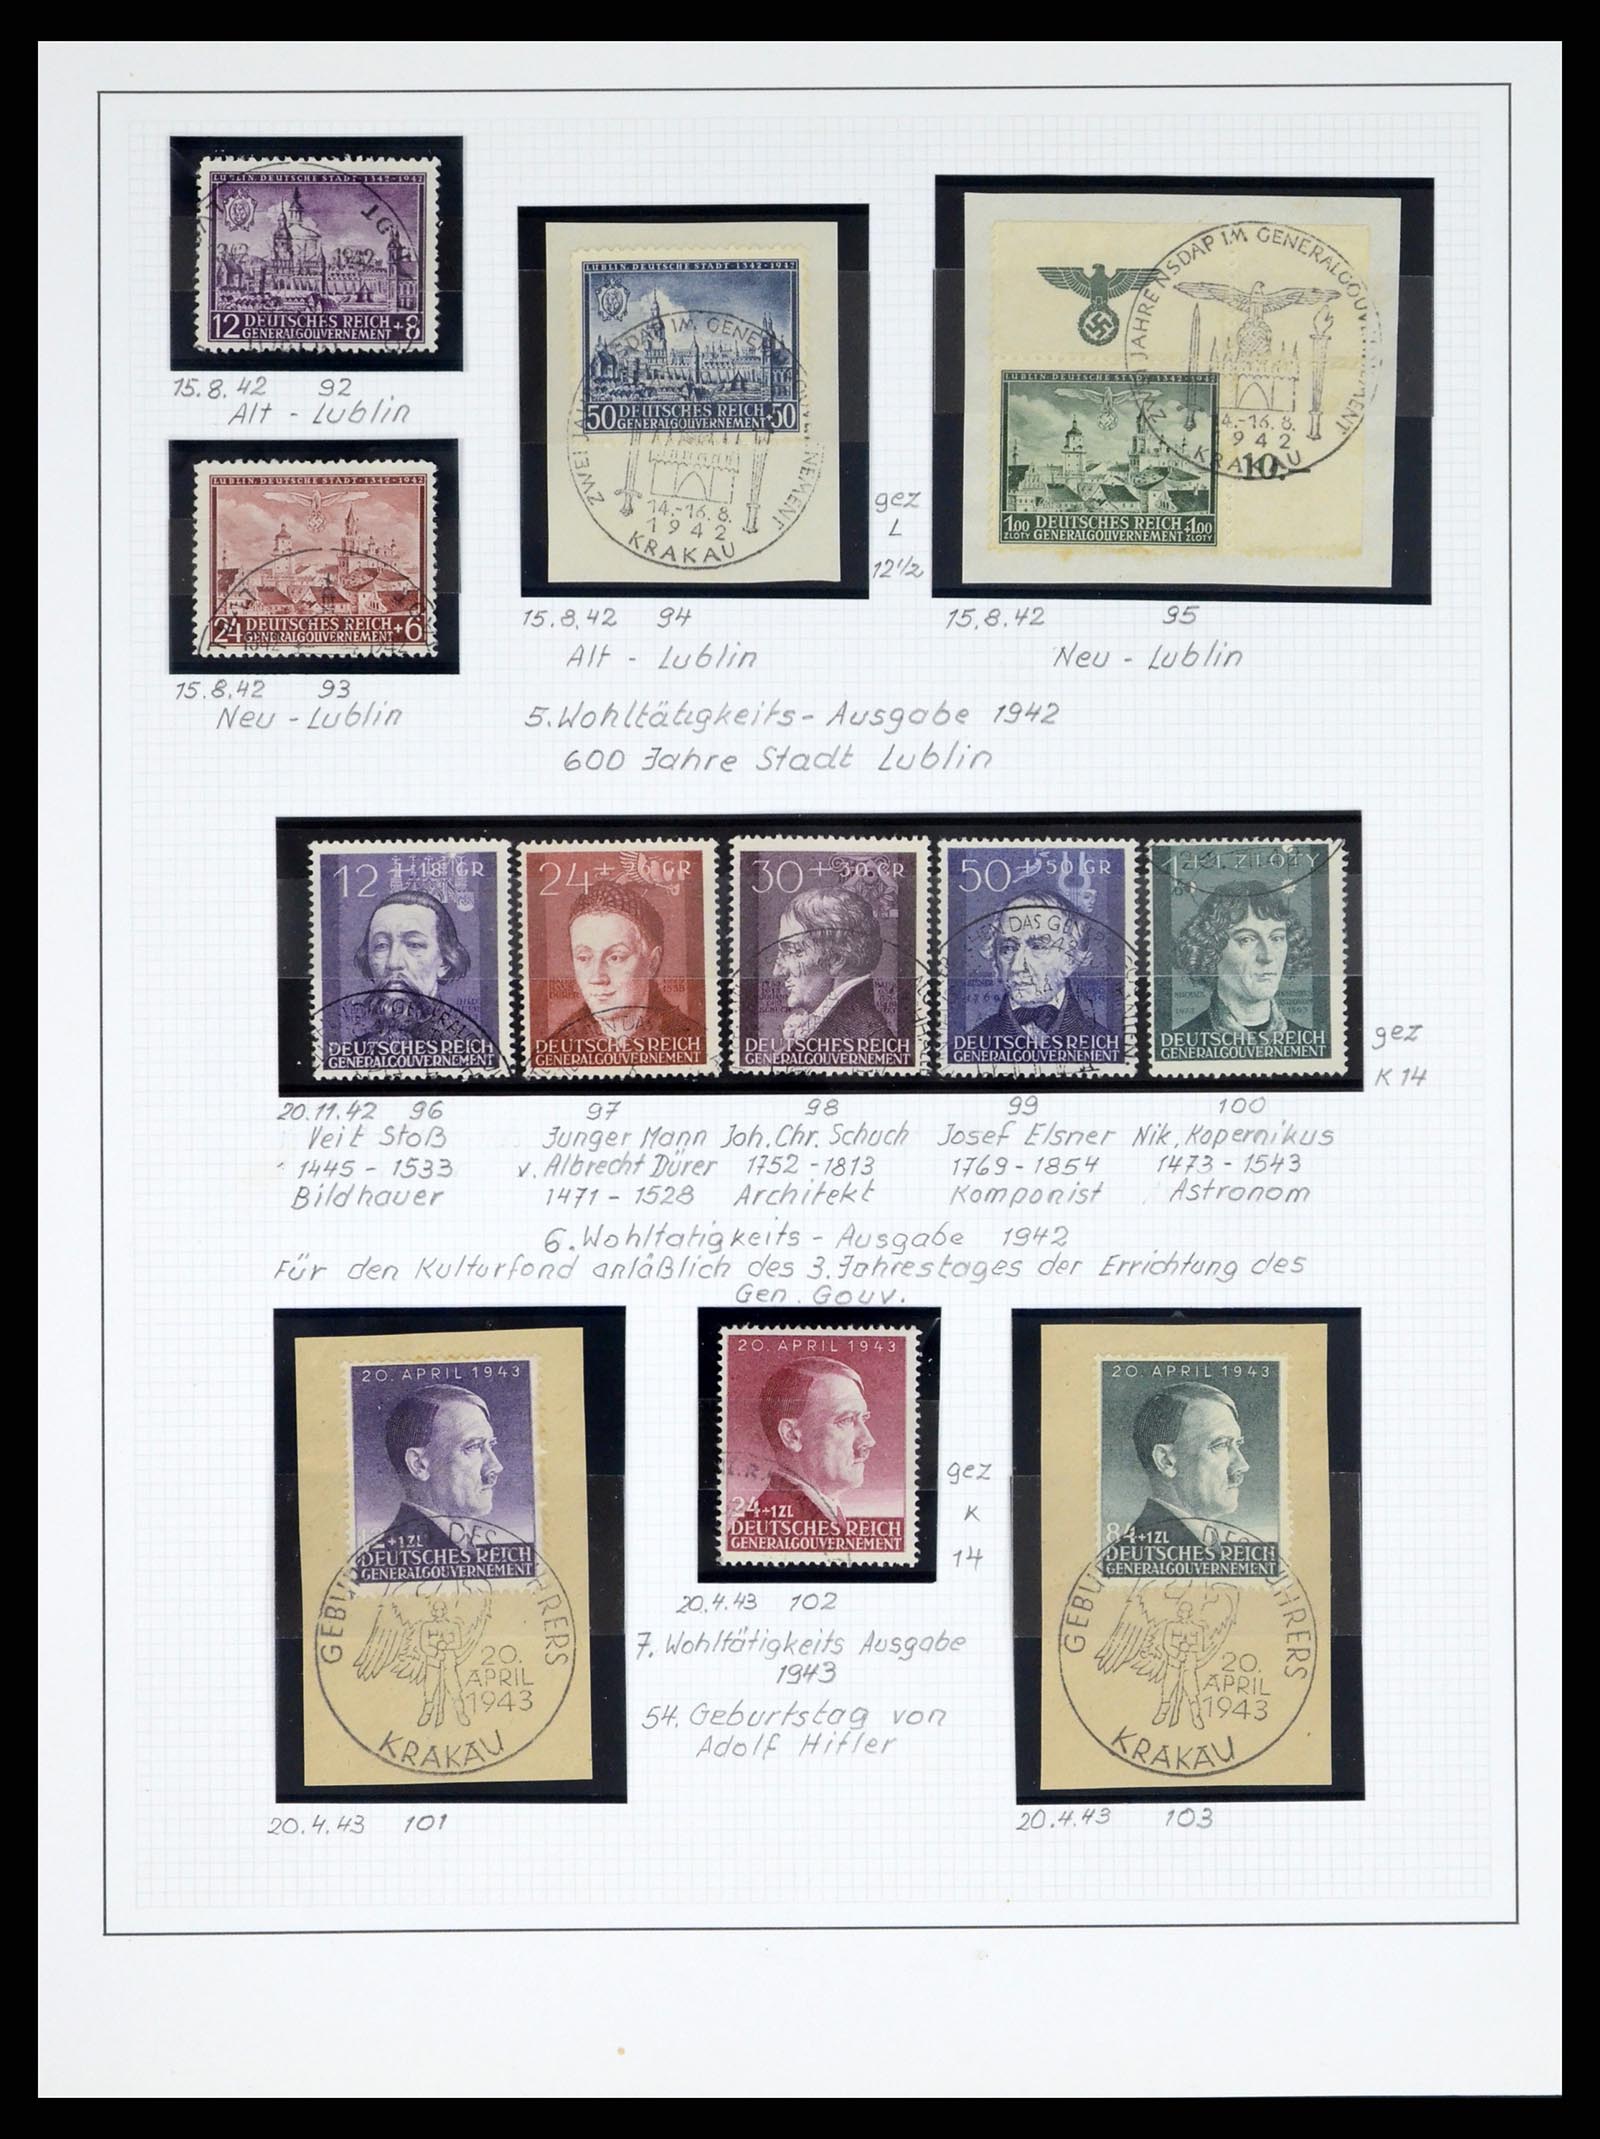 37535 172 - Stamp collection 37535 German occupation second worldwar 1939-1945.